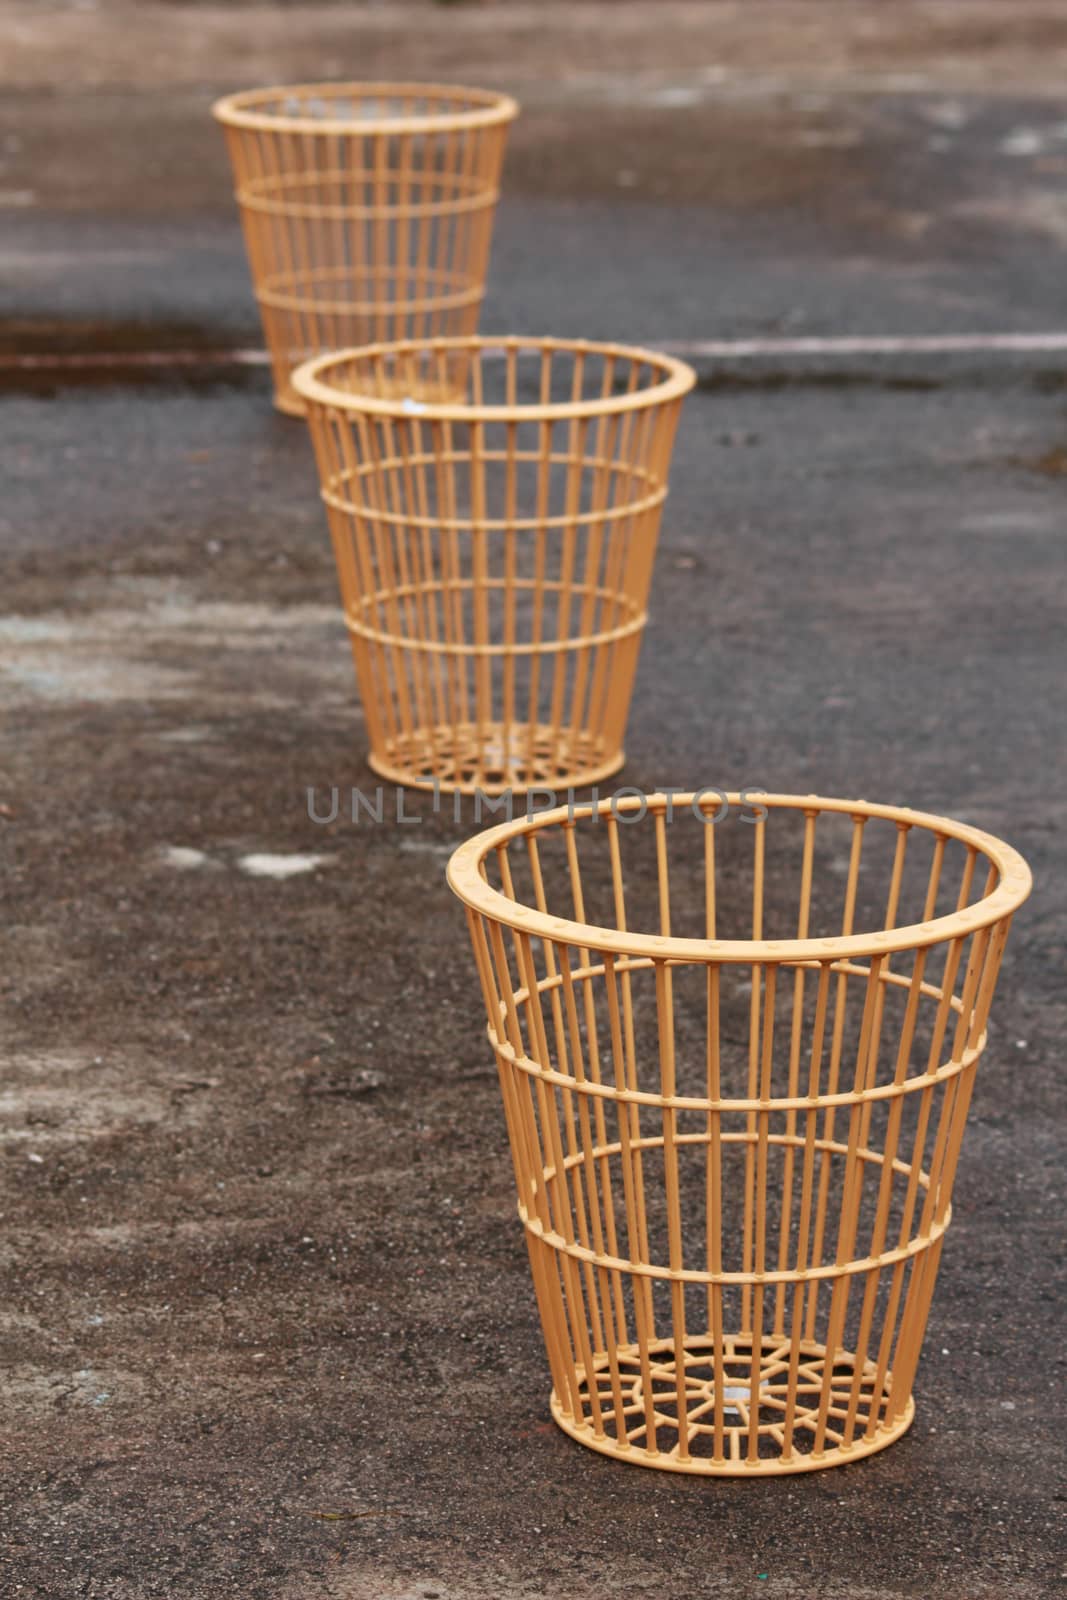 The baskets are arrange on the wet stadium.